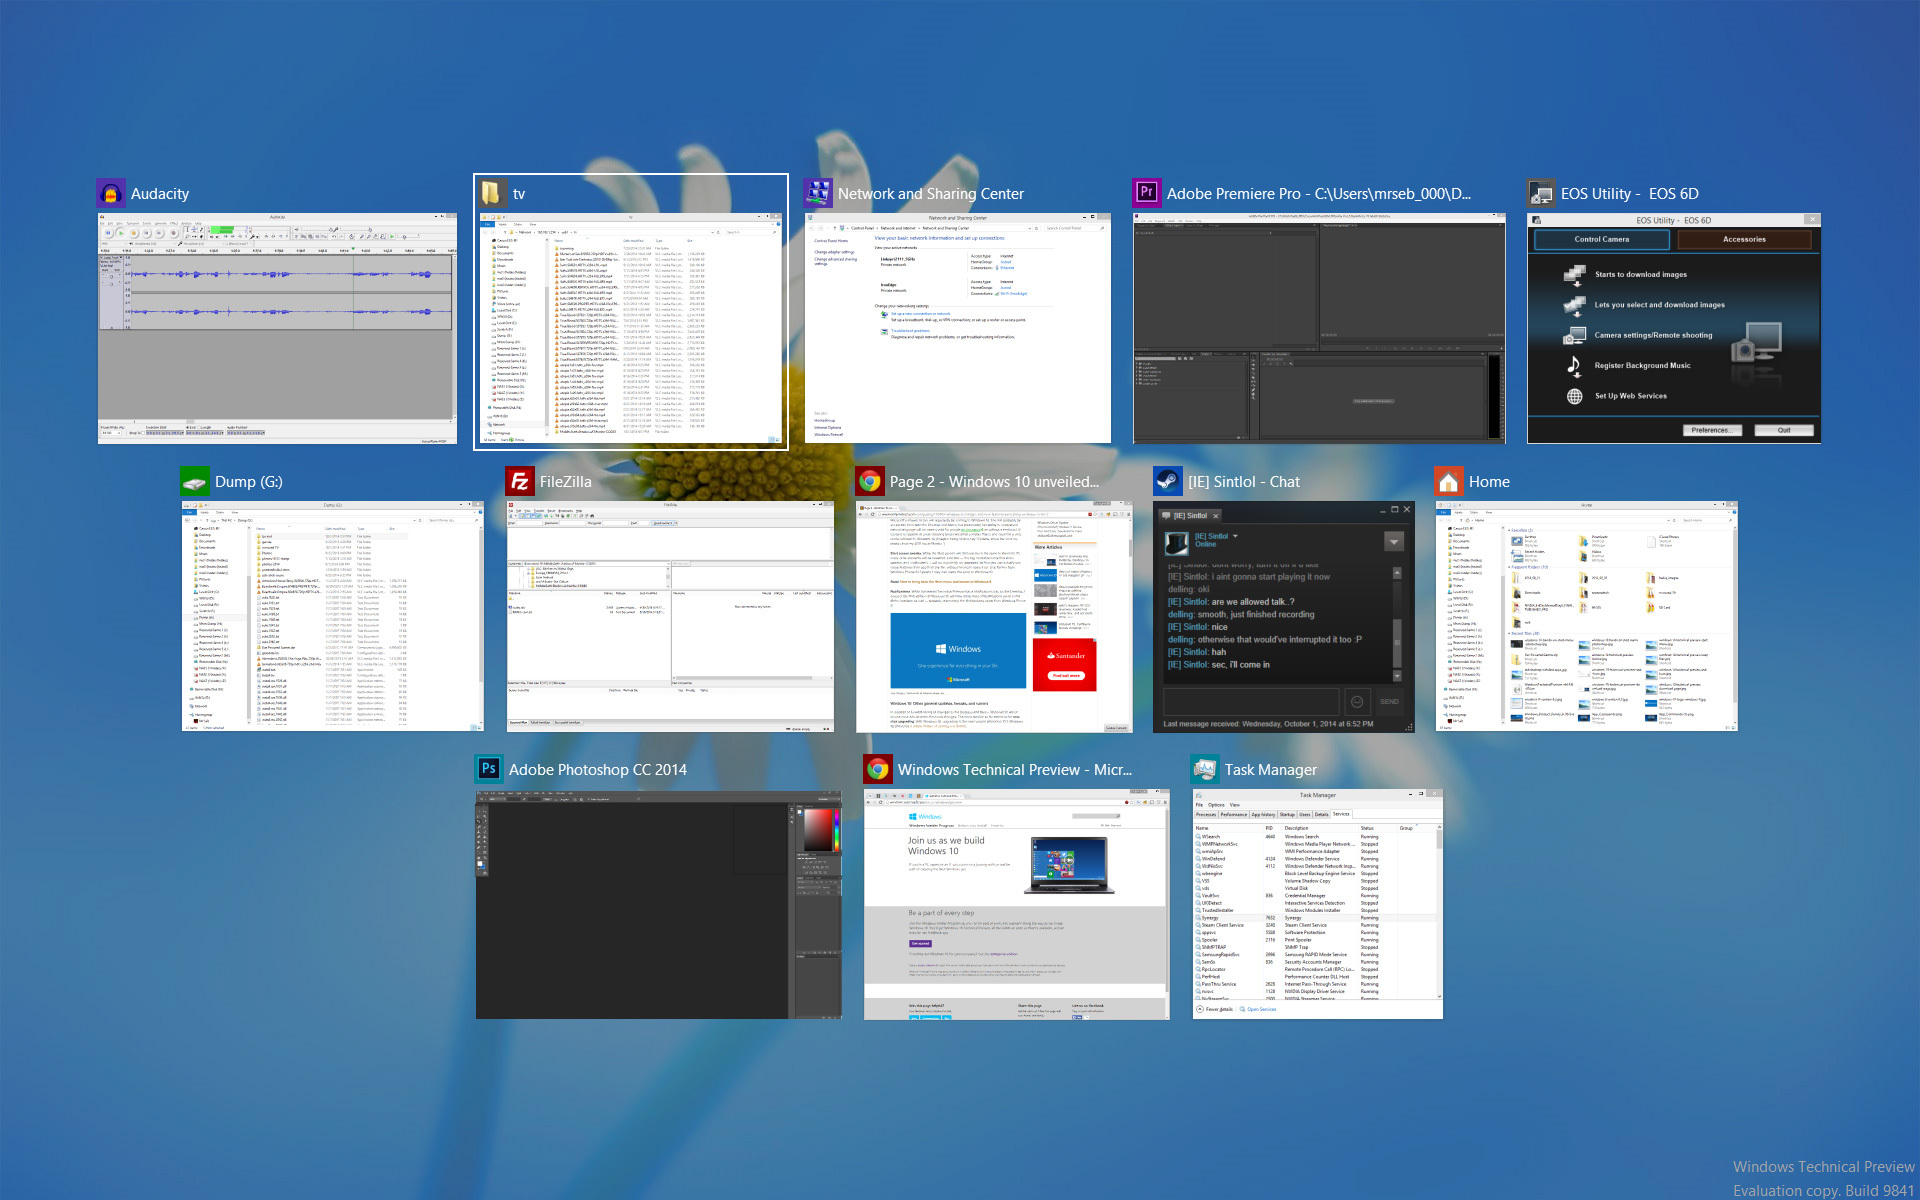 windows-10-technical-preview-alt-tab-640x400.jpg